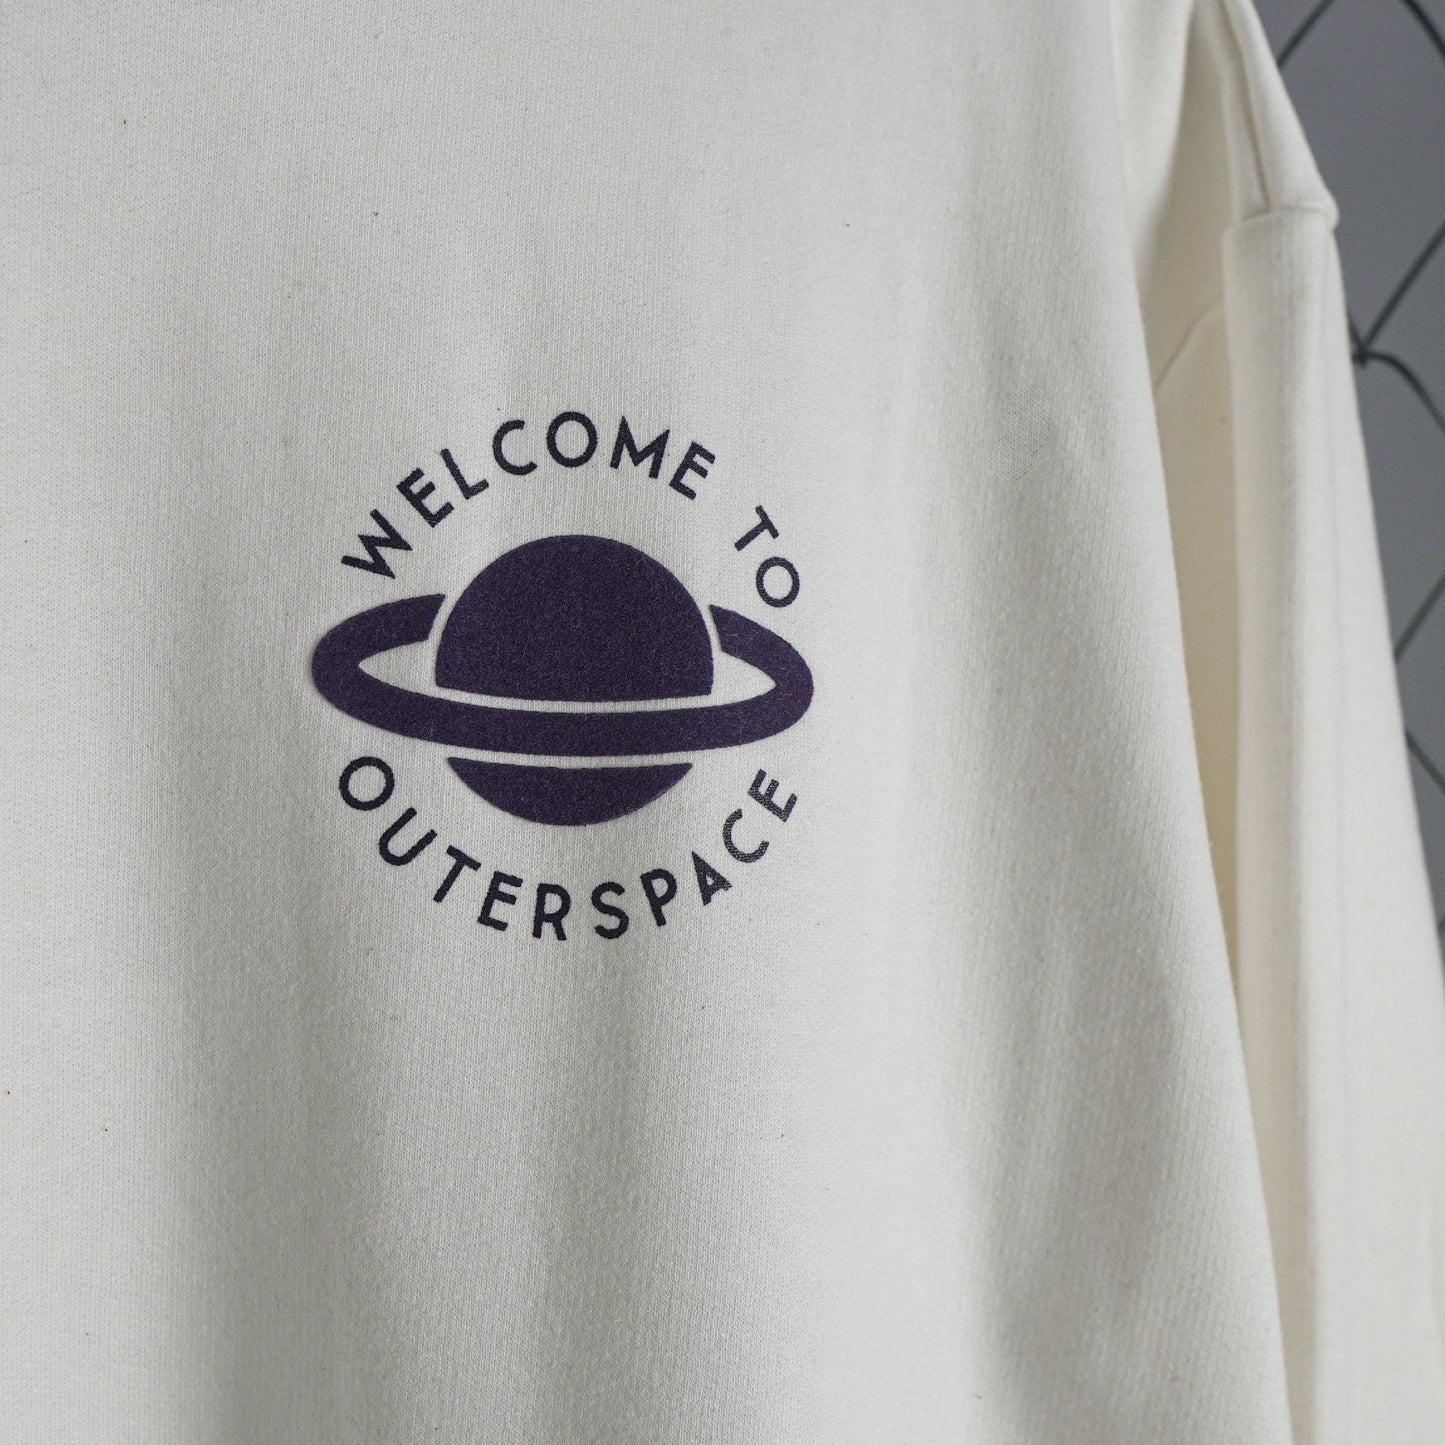 Exploration Division in "Interstellar" Off White Sweater